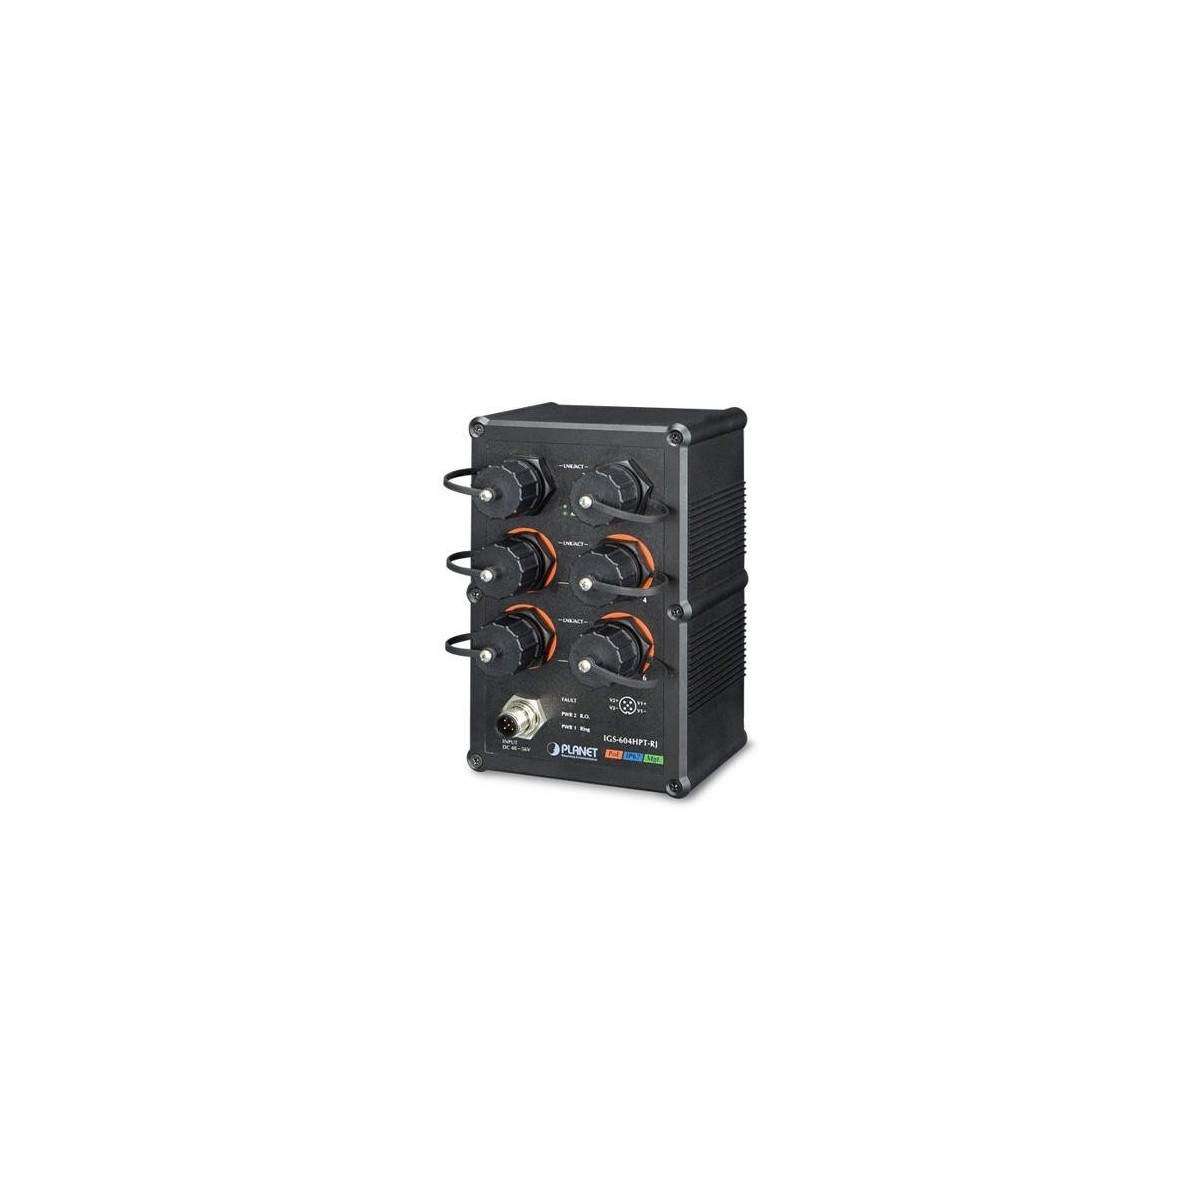 Planet IGS-604HPT-RJ - Managed - L2+ - Gigabit Ethernet (10/100/1000) - Full duplex - Power over Ethernet (PoE) - Wall mountable